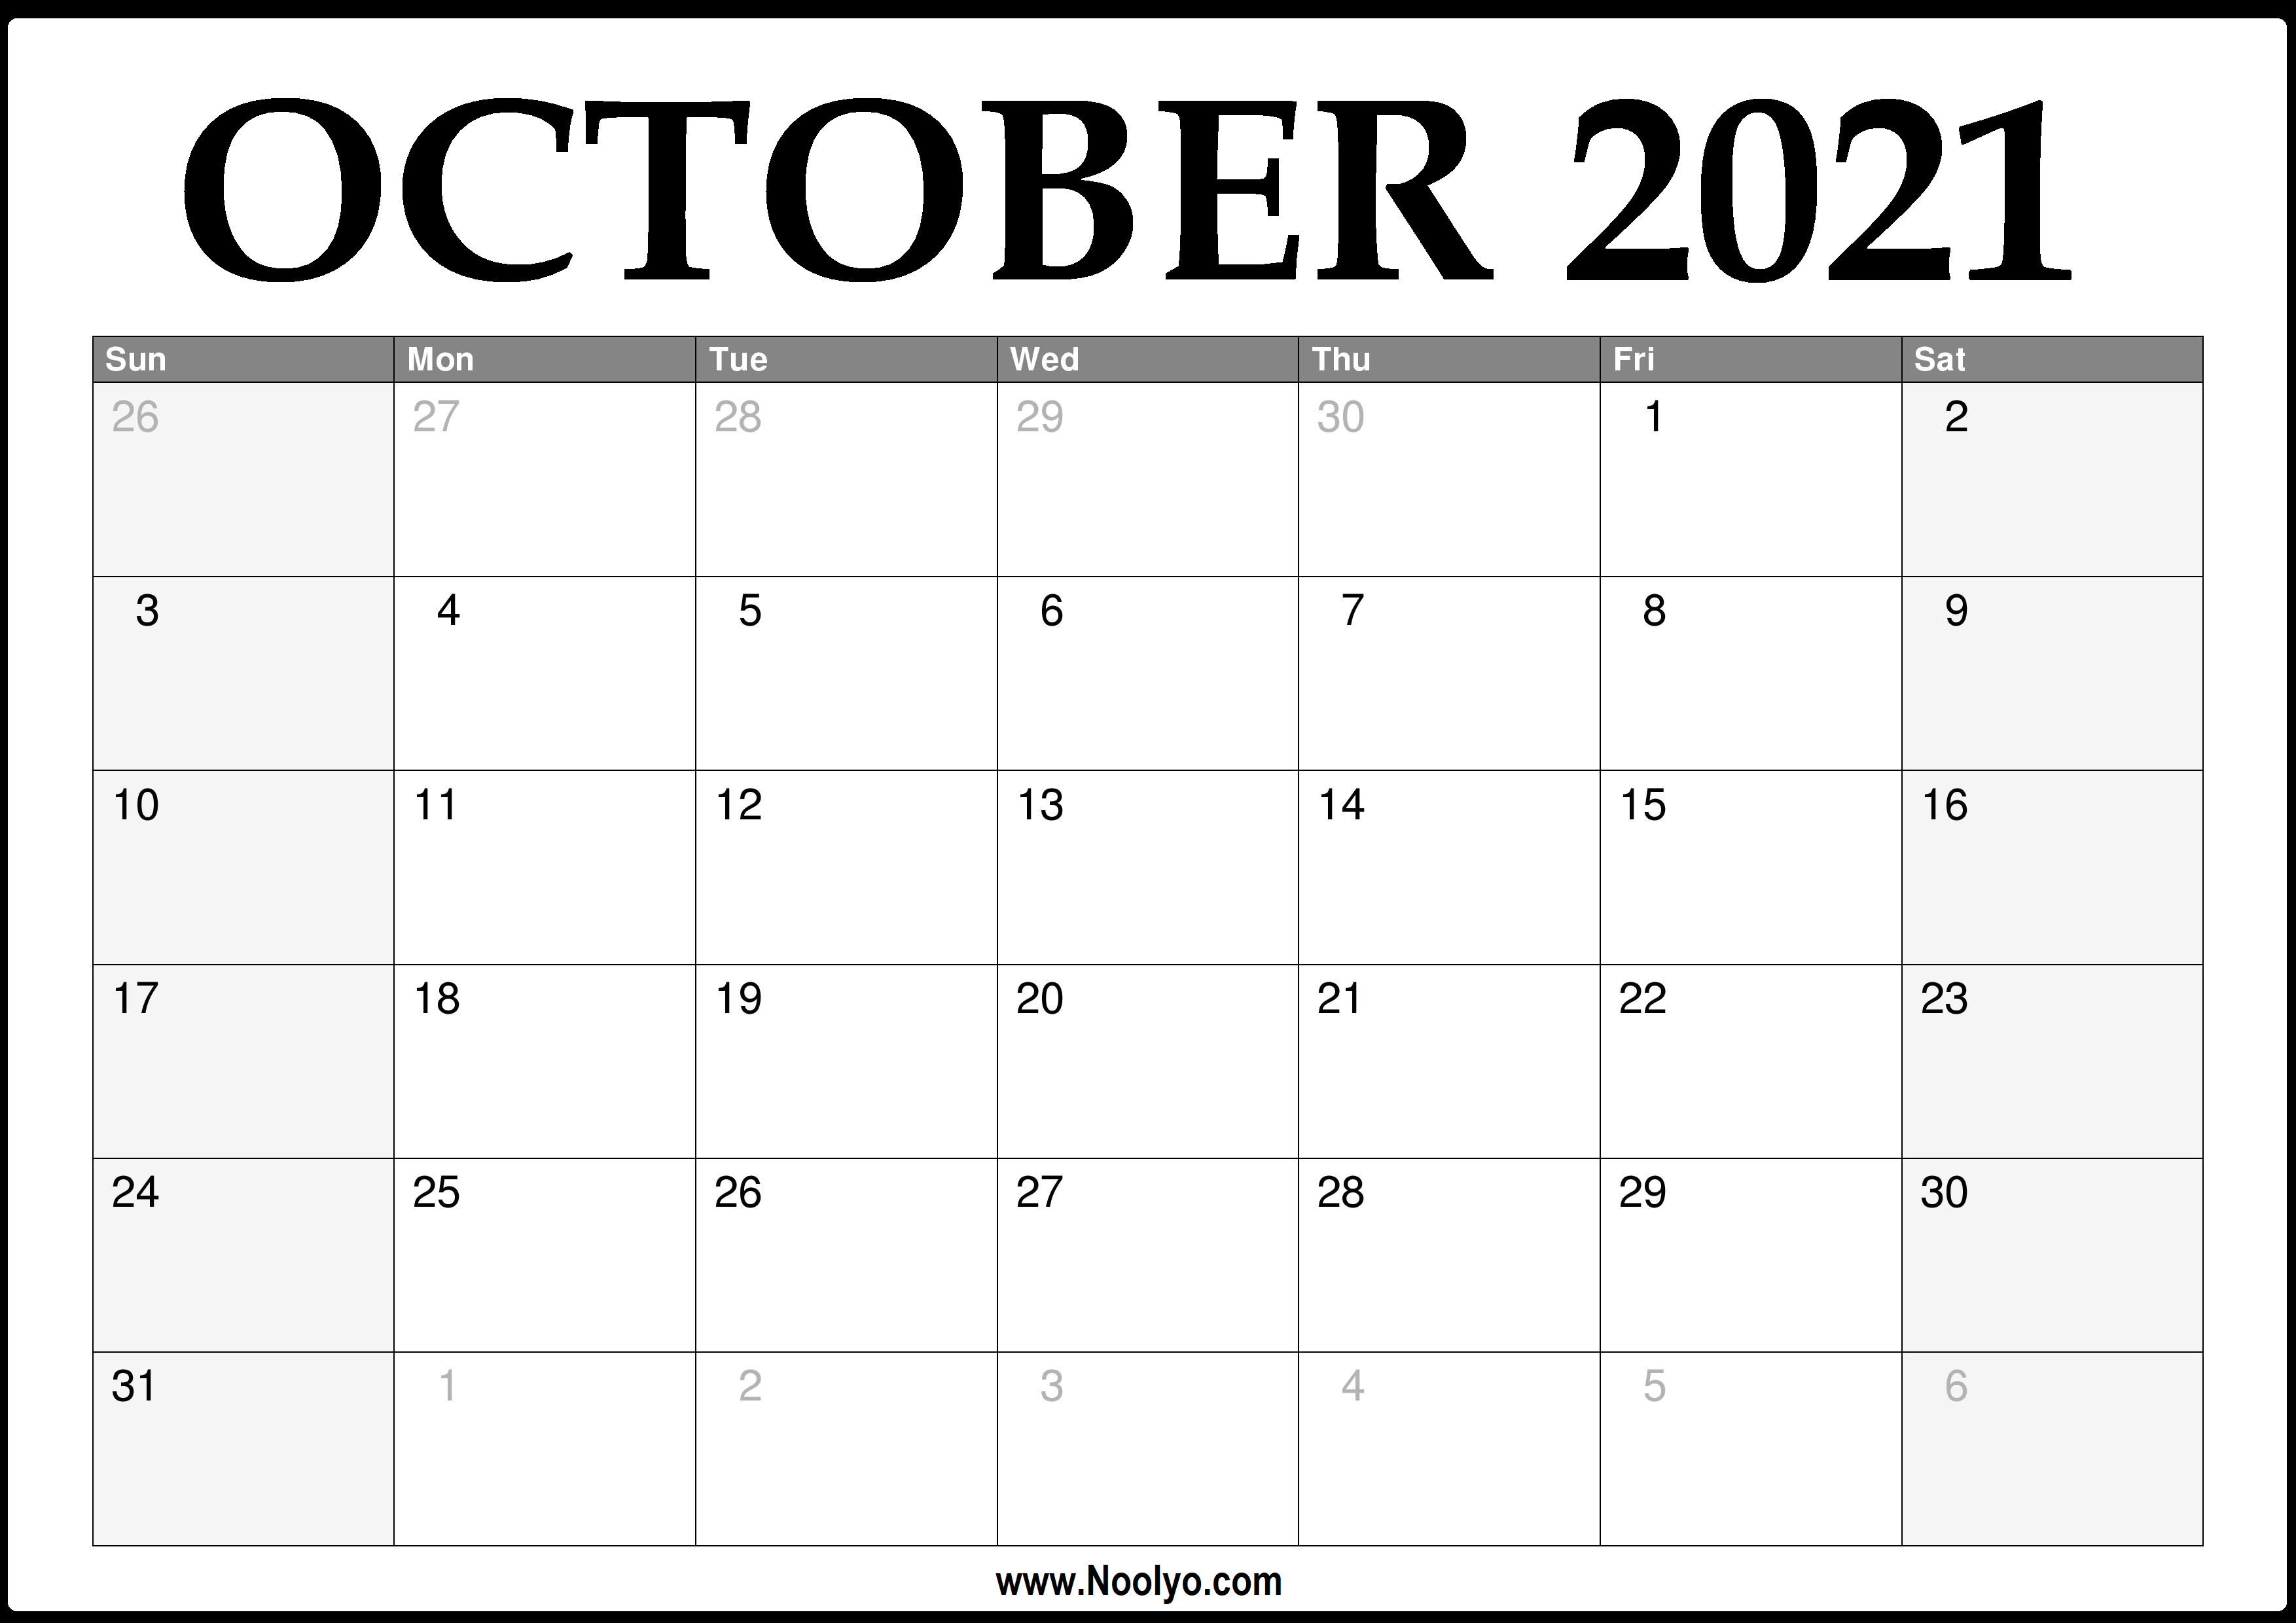 October-2021-Calendar-Printable-Blank01